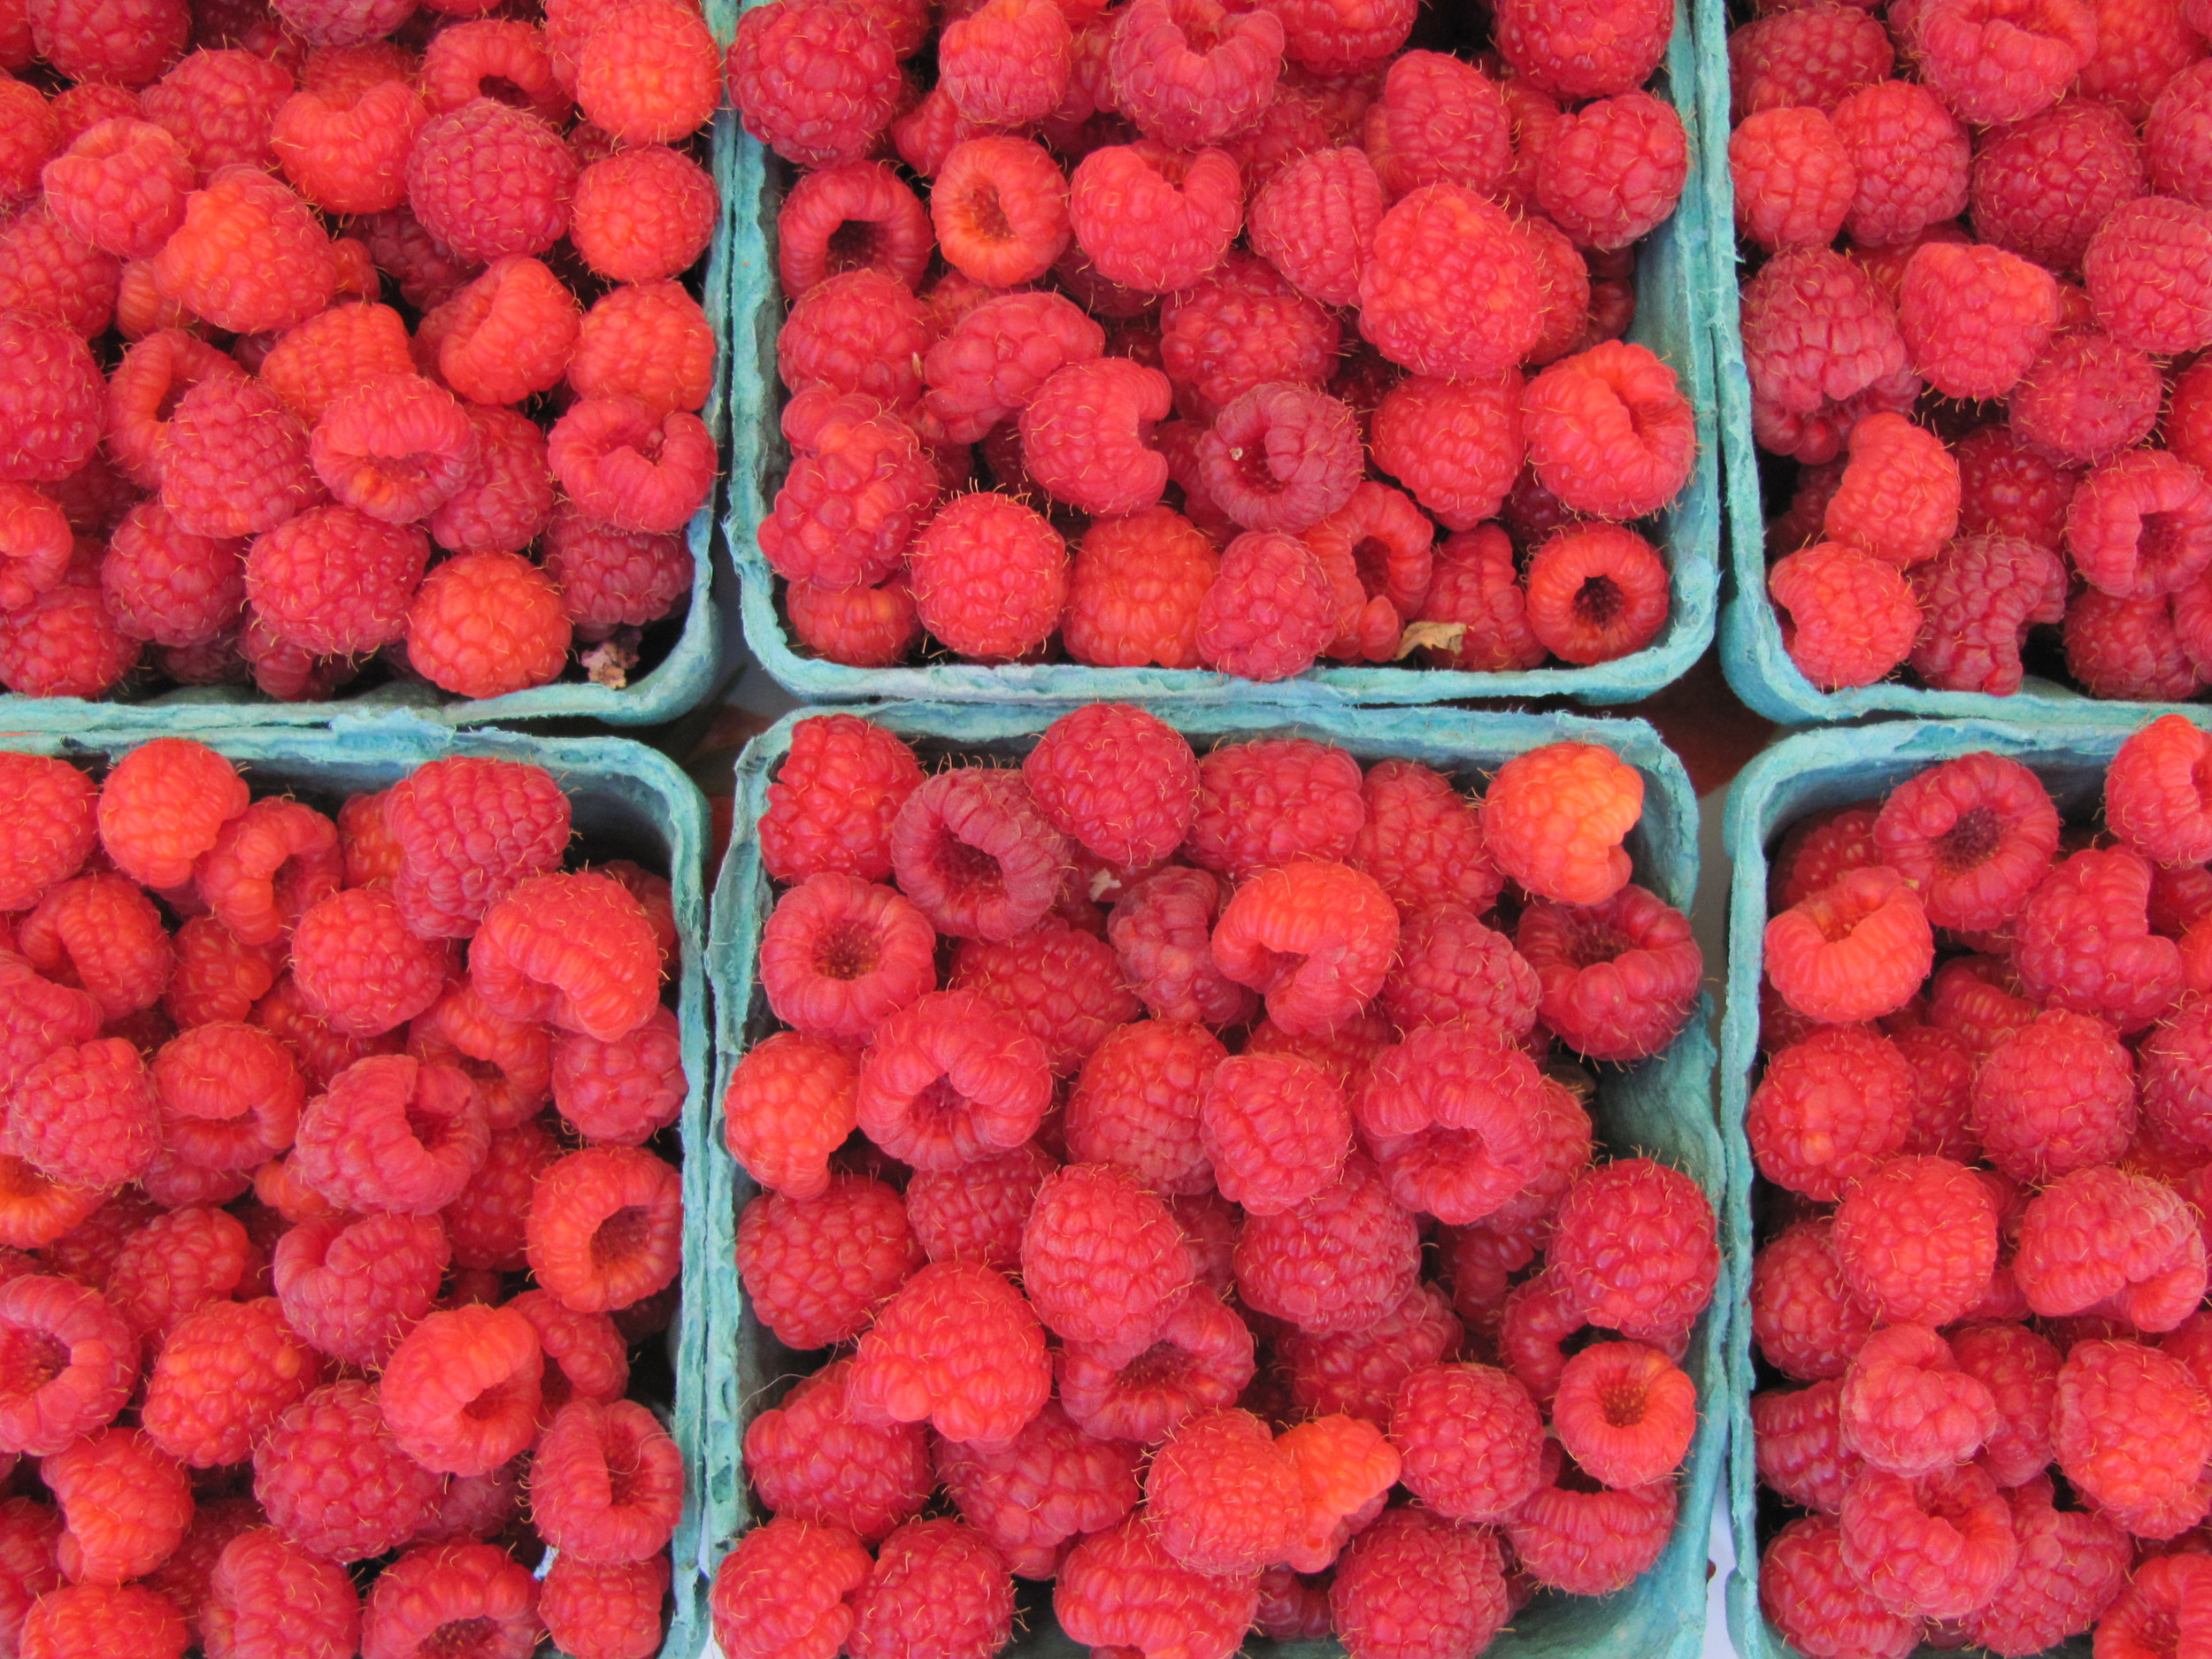 Rossmoor Farmers' Market raspberries